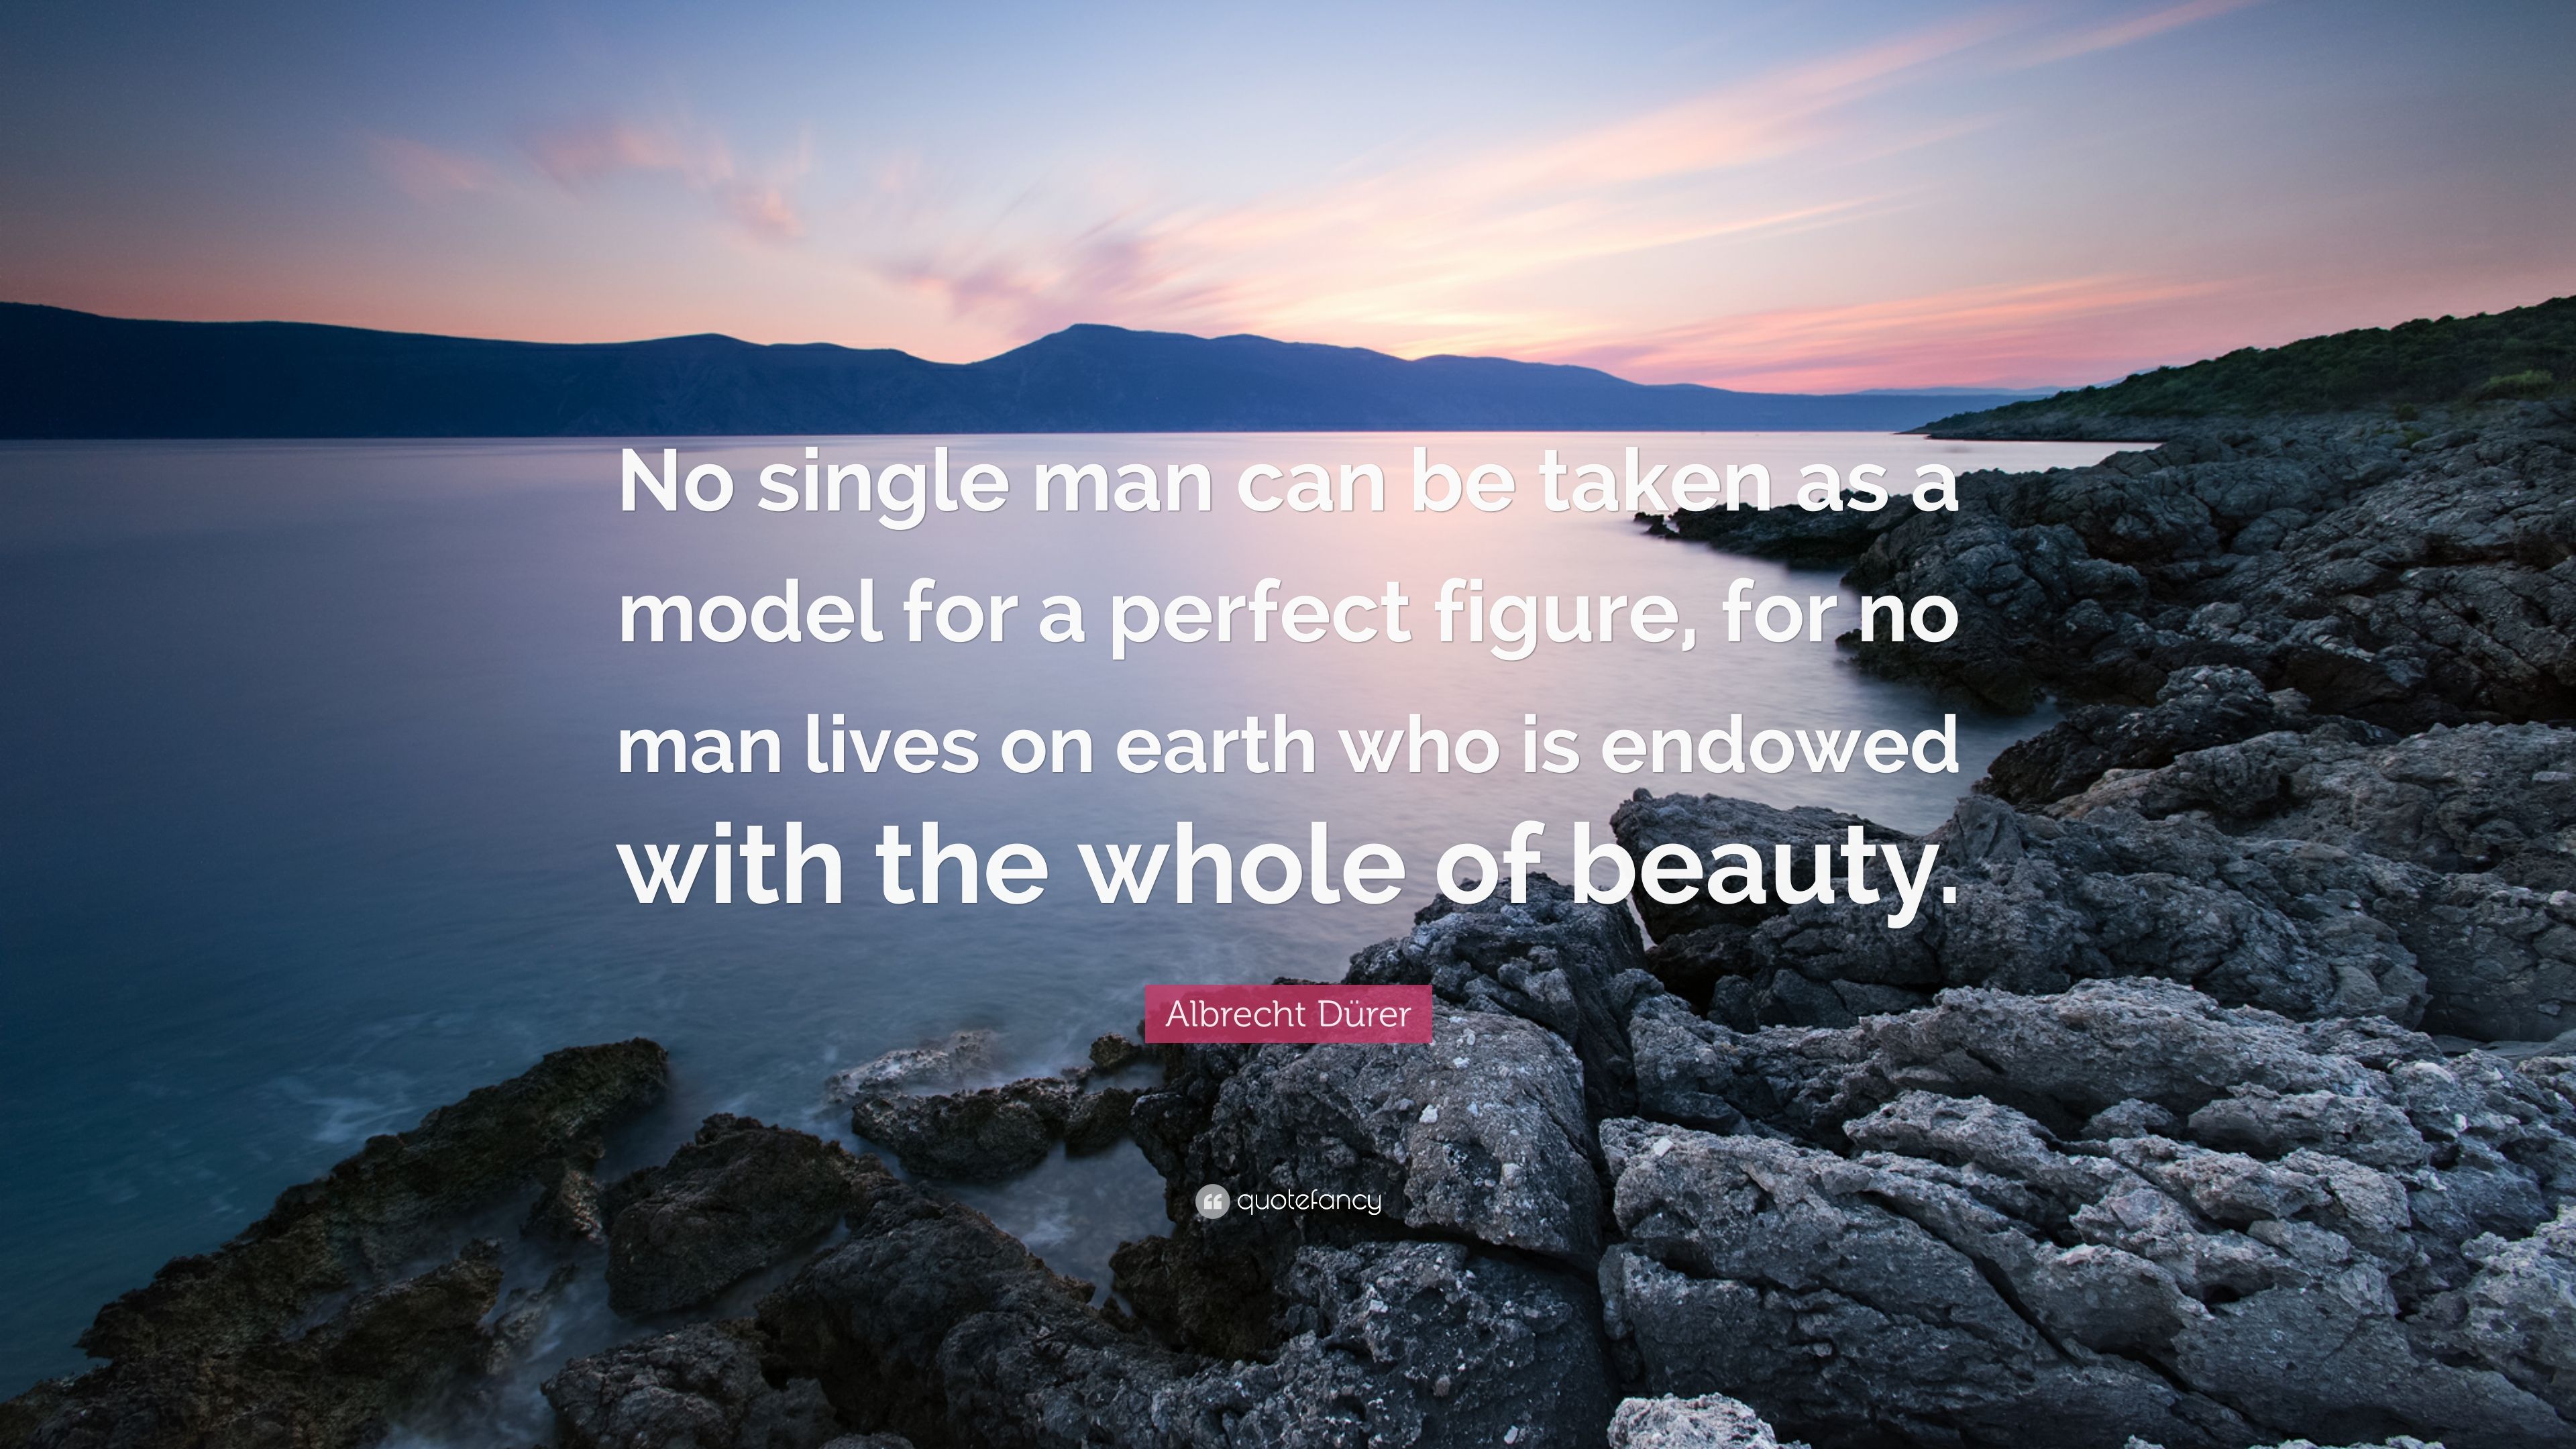 Albrecht Dürer Quote: “No single man can be taken as a model for a